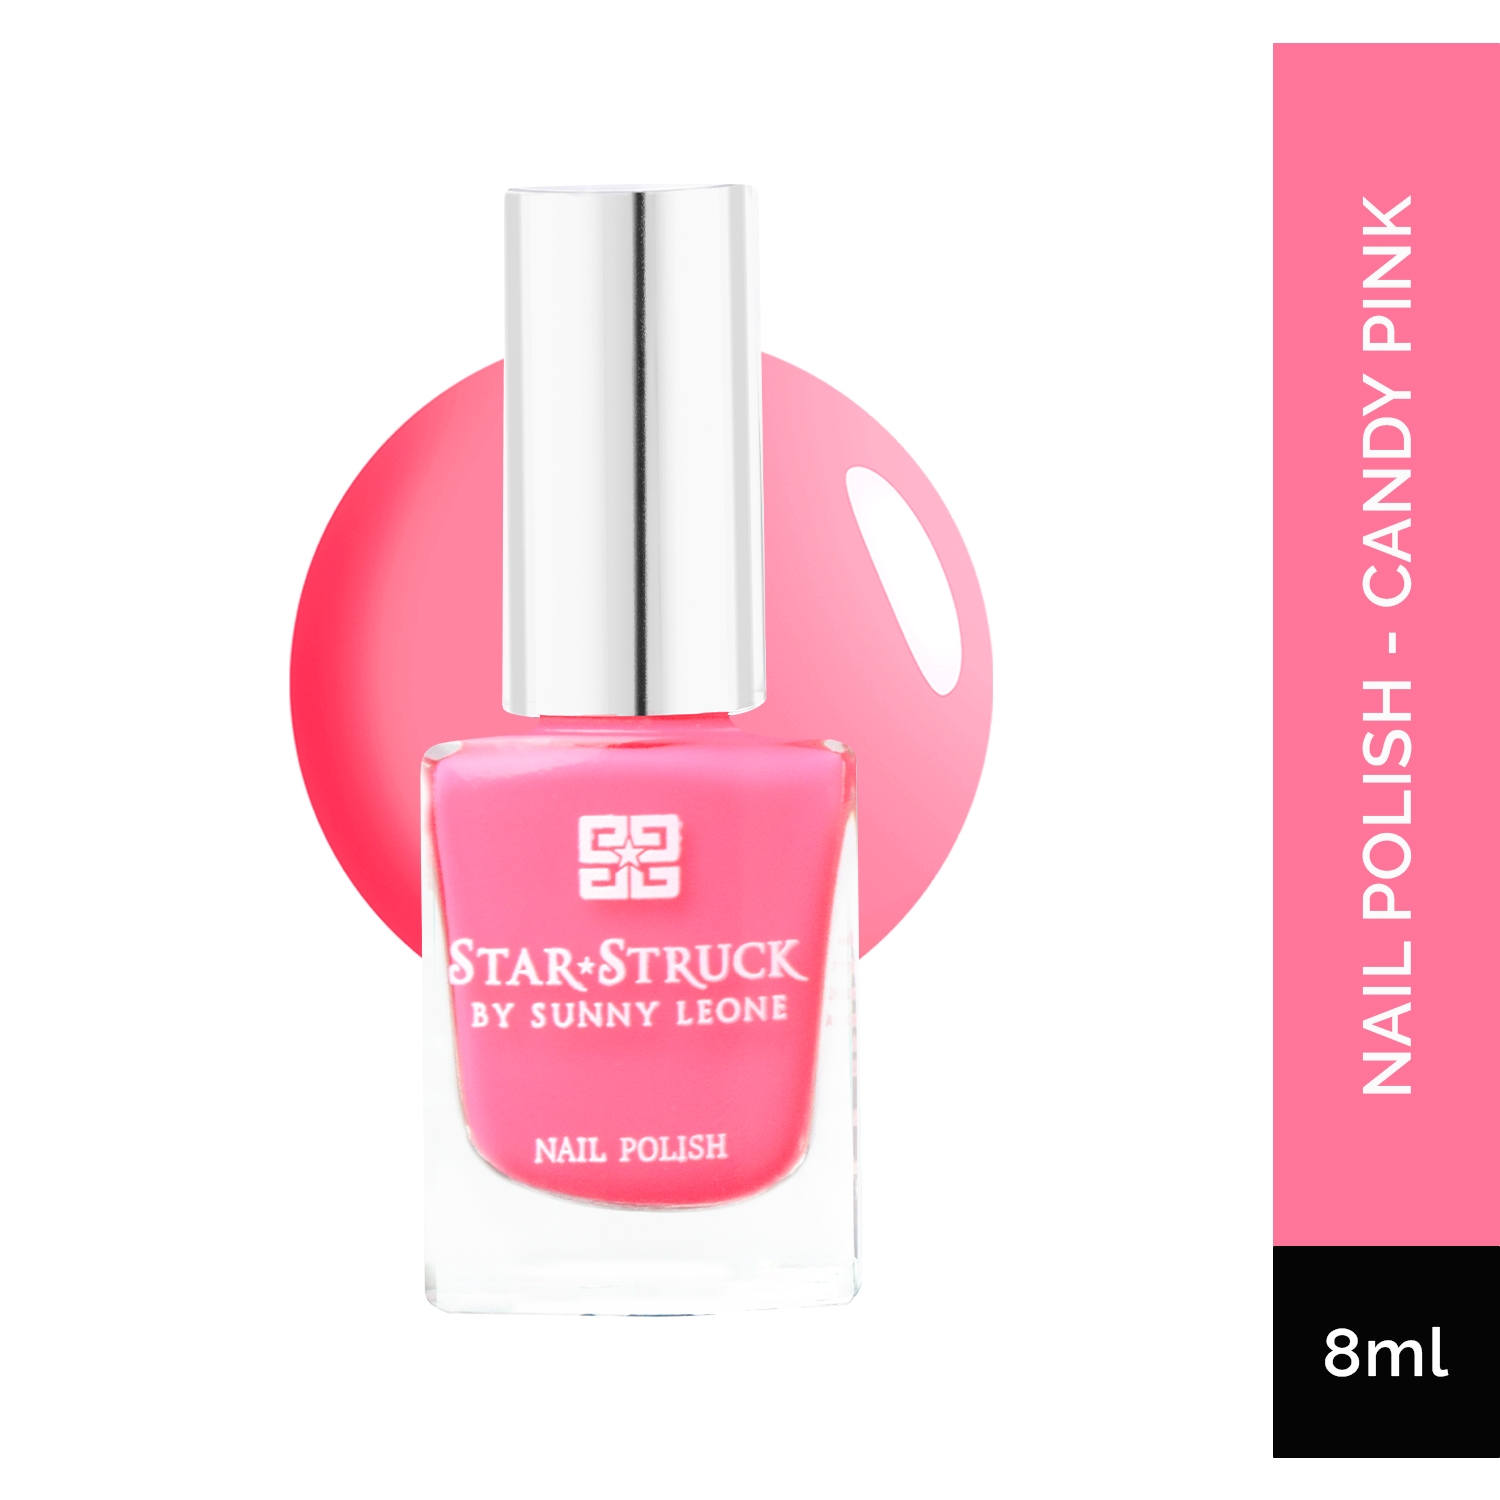 Star Struck by Sunny Leone | Star Struck by Sunny Leone Nail Polish - Candy Pink (8ml)